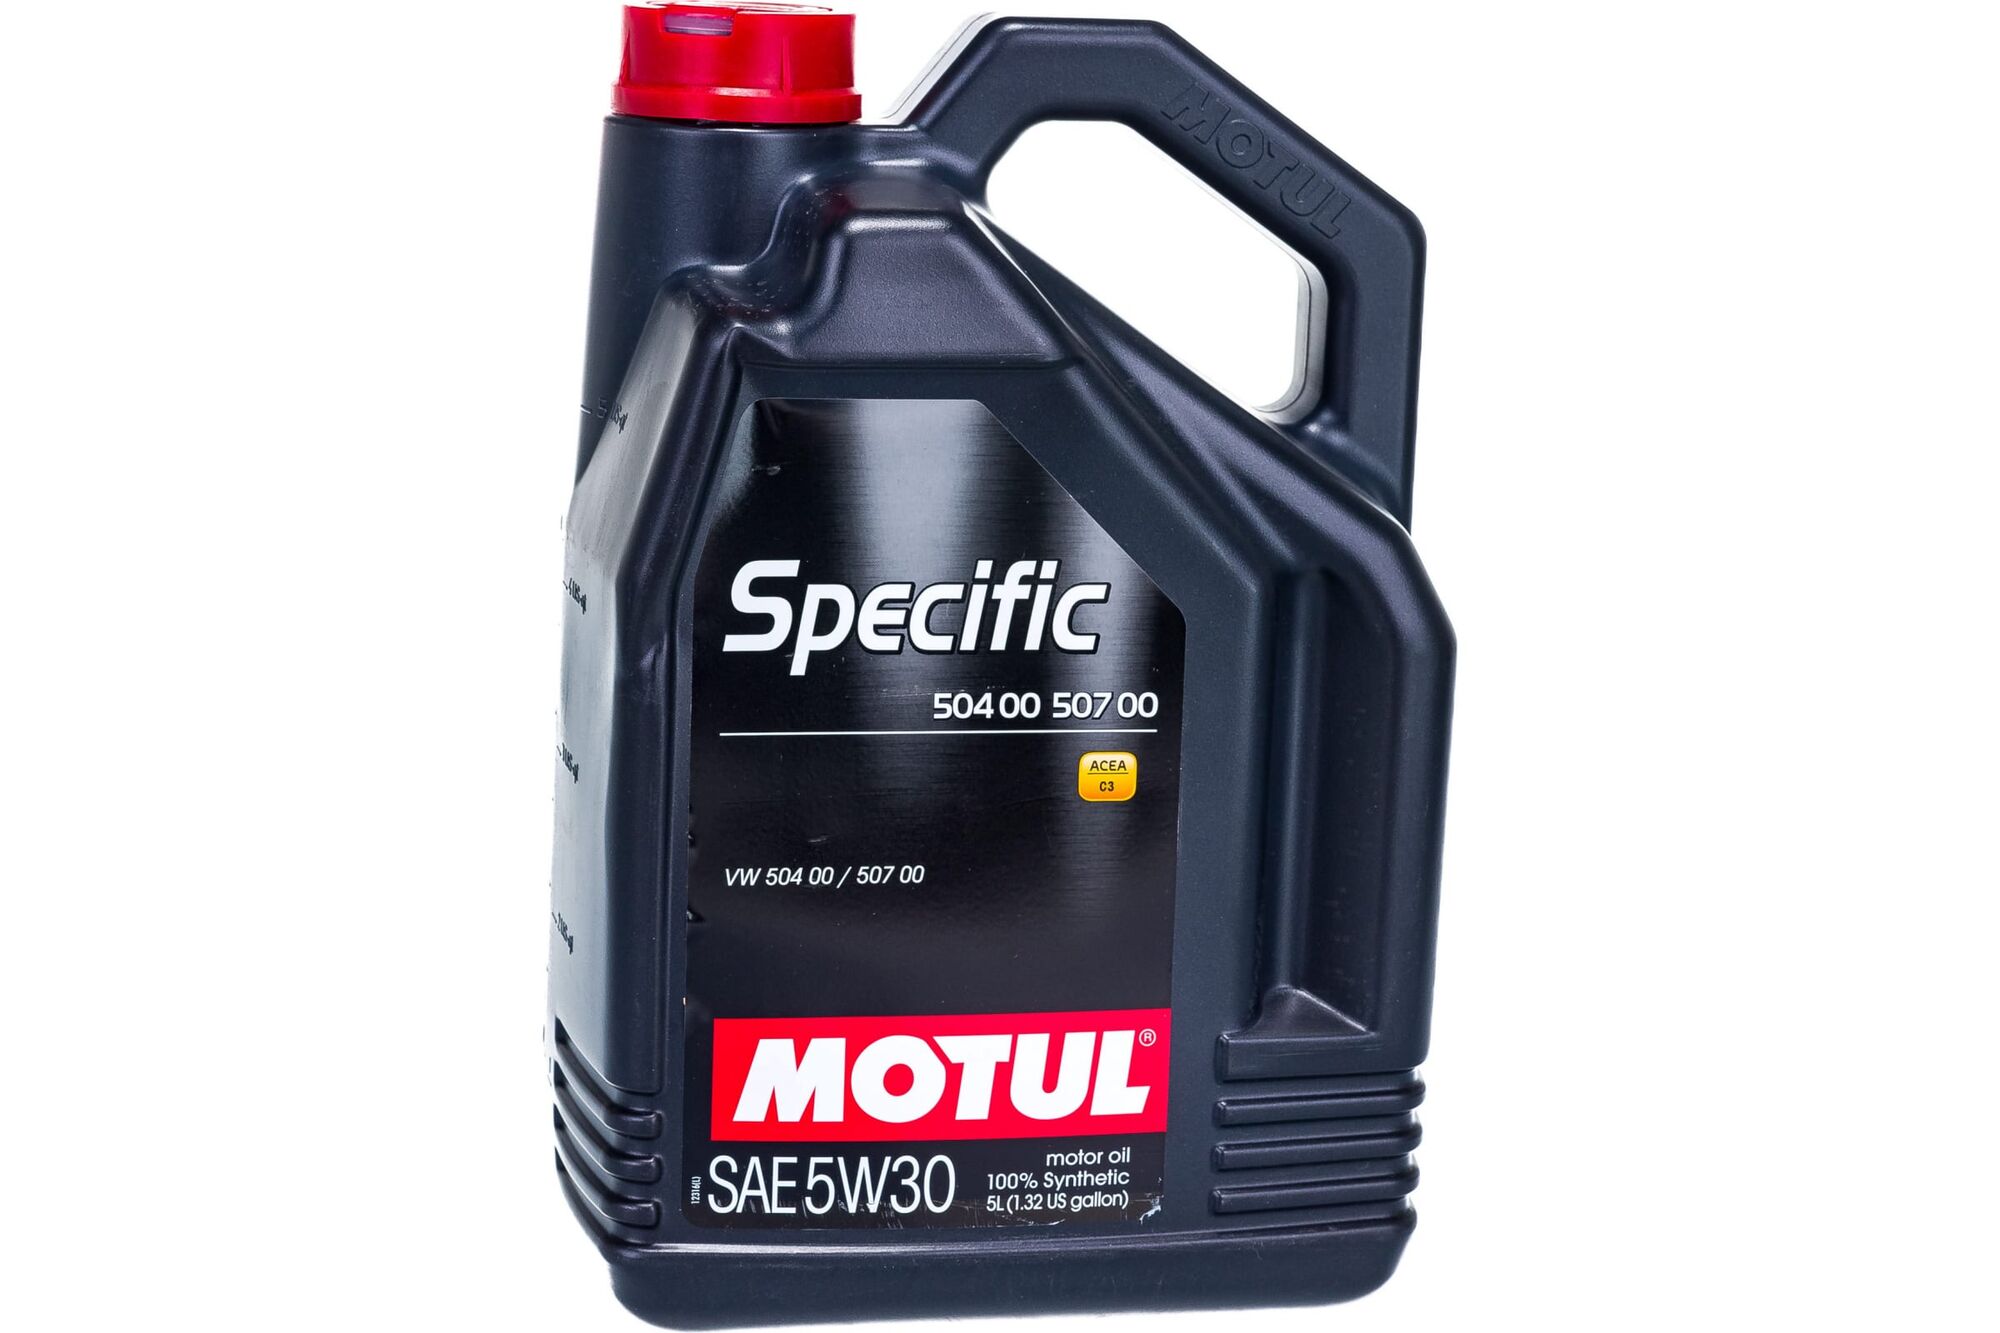 Синтетическое масло Specific VW 504 00 507 00 5W30 5 л MOTUL 106375